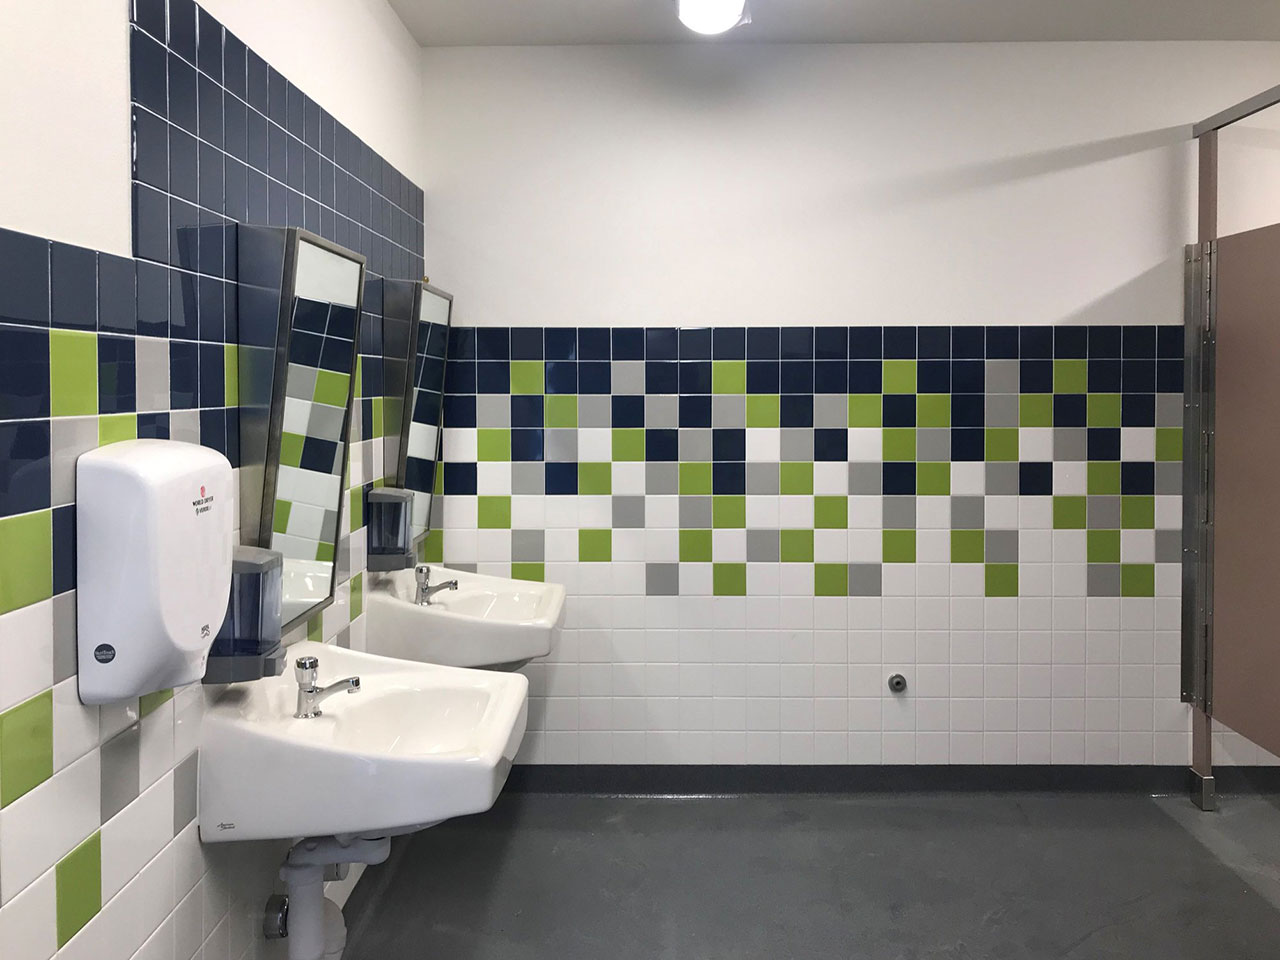 greer elementary bathroom